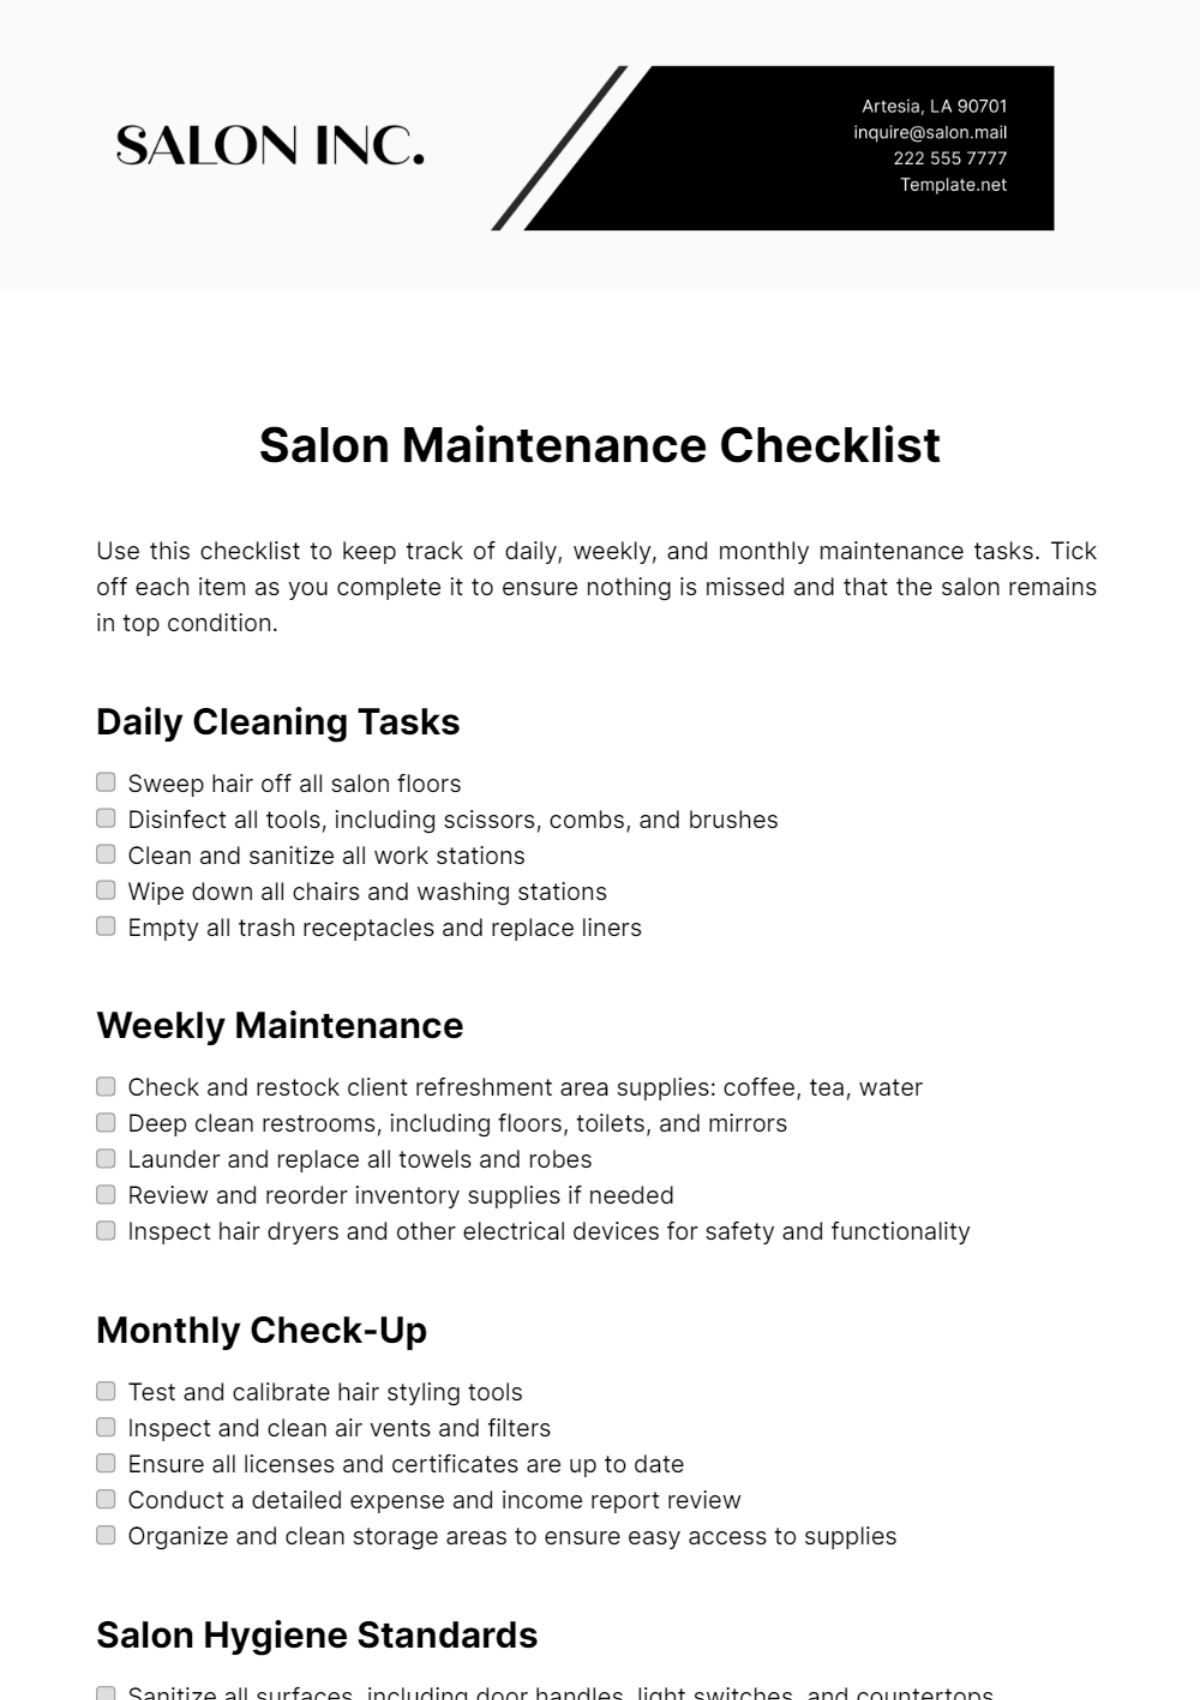 Salon Maintenance Checklist Template